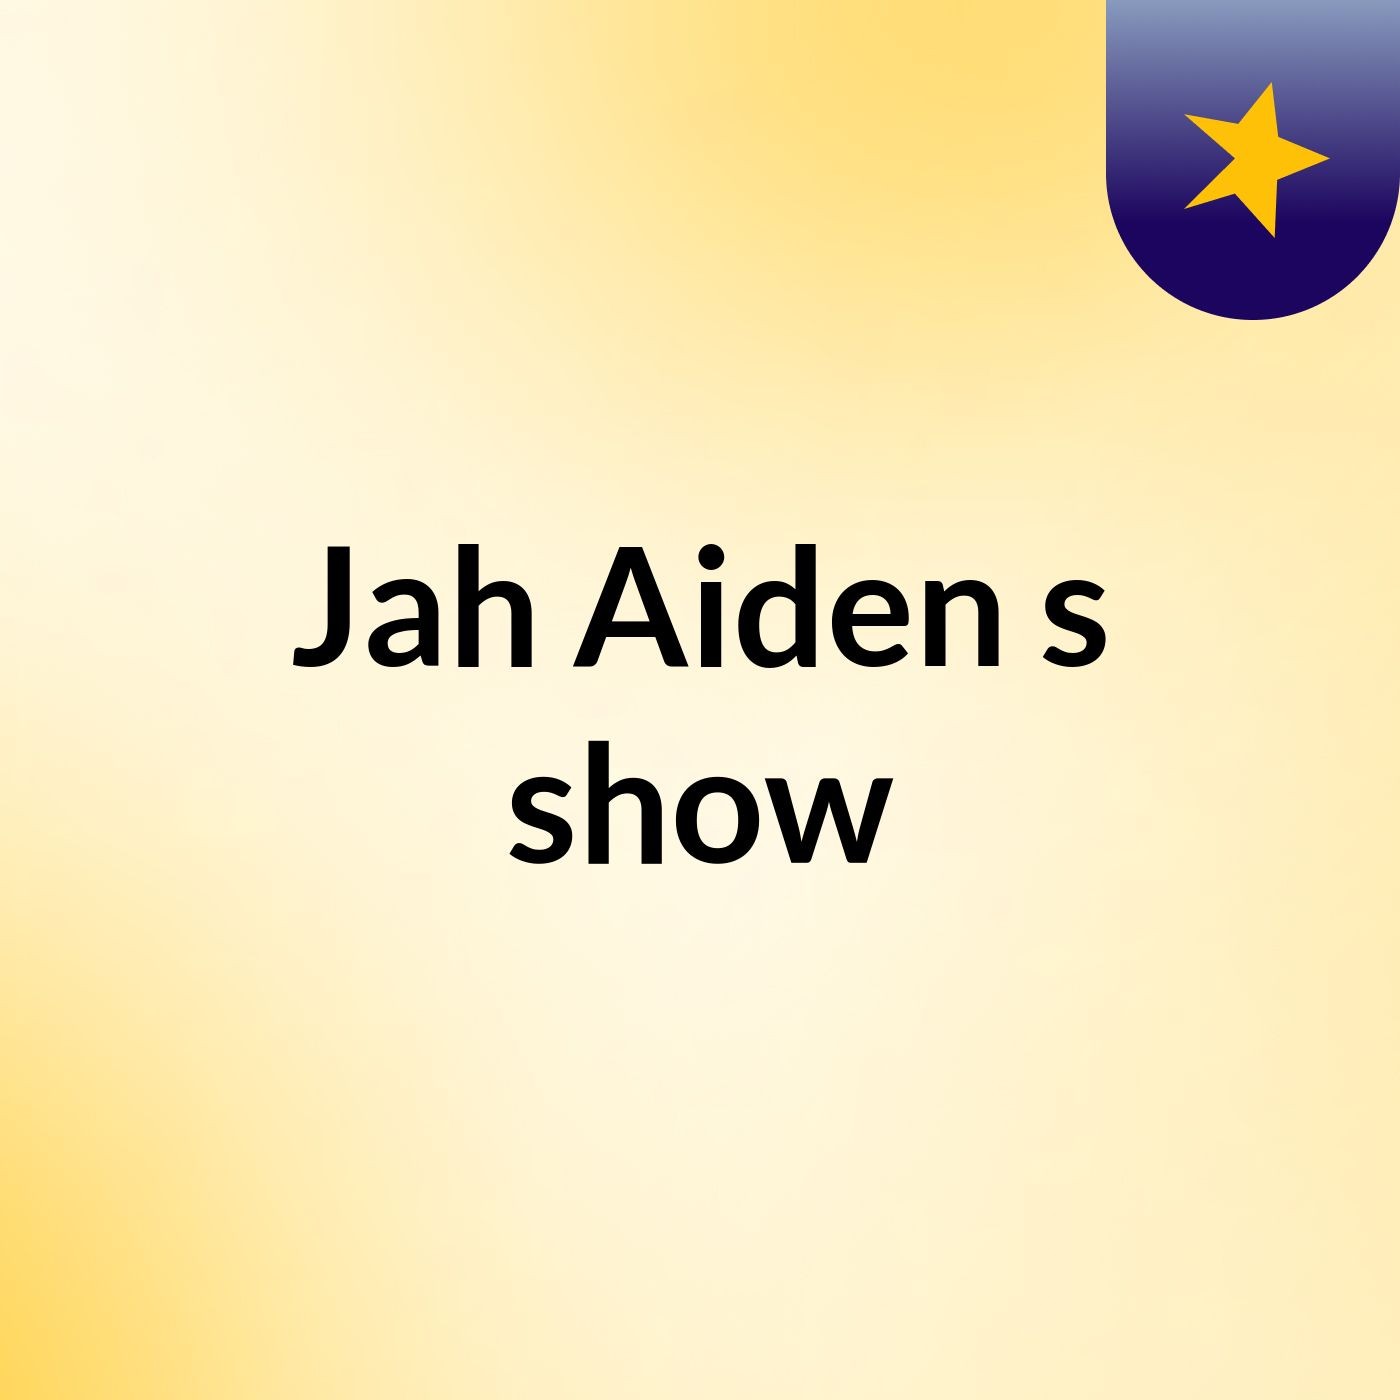 Jah Aiden's show